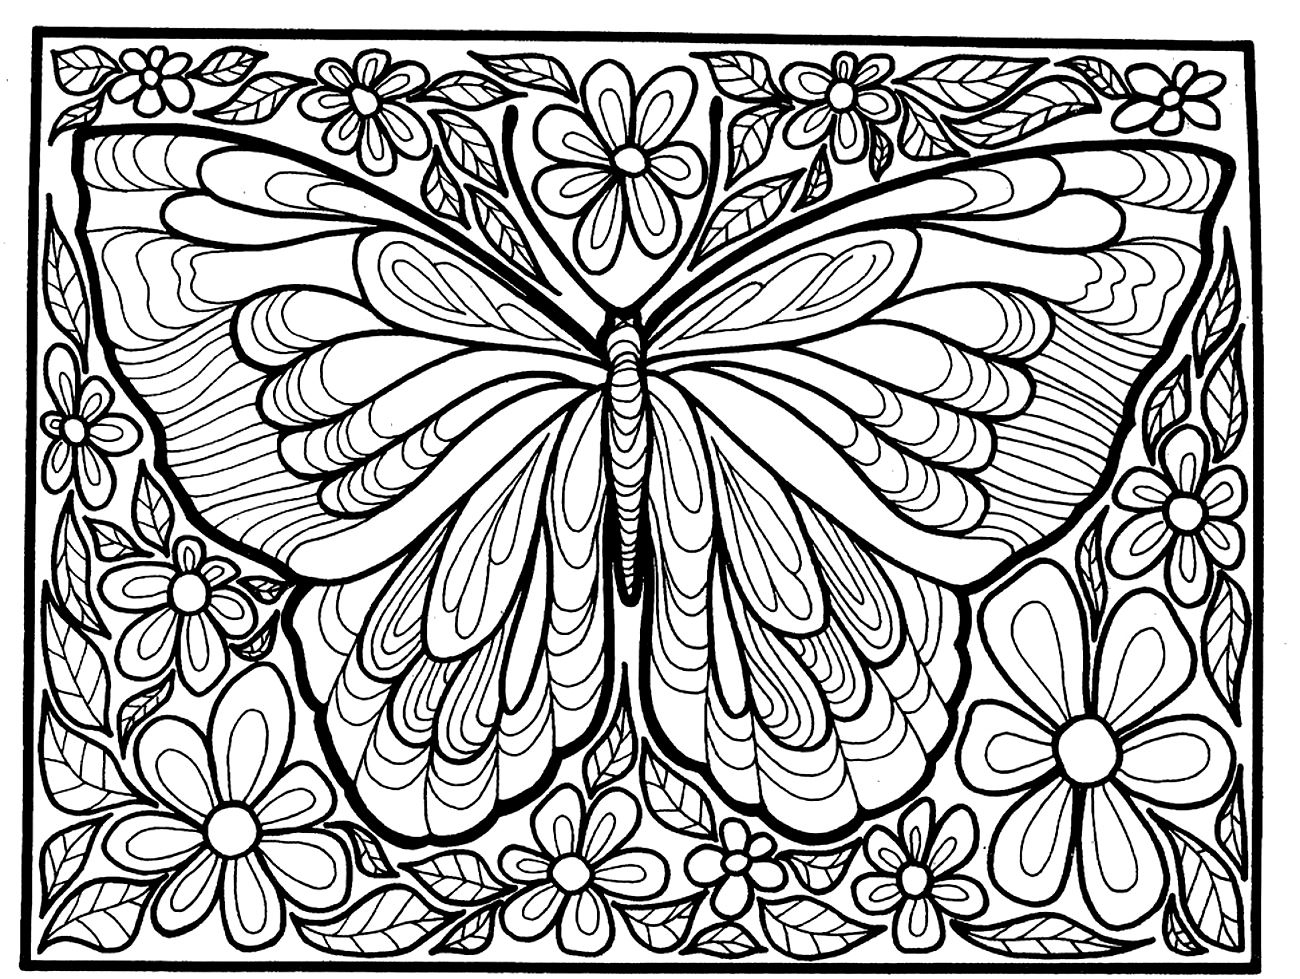 Раскраски Бабочка Антистресс